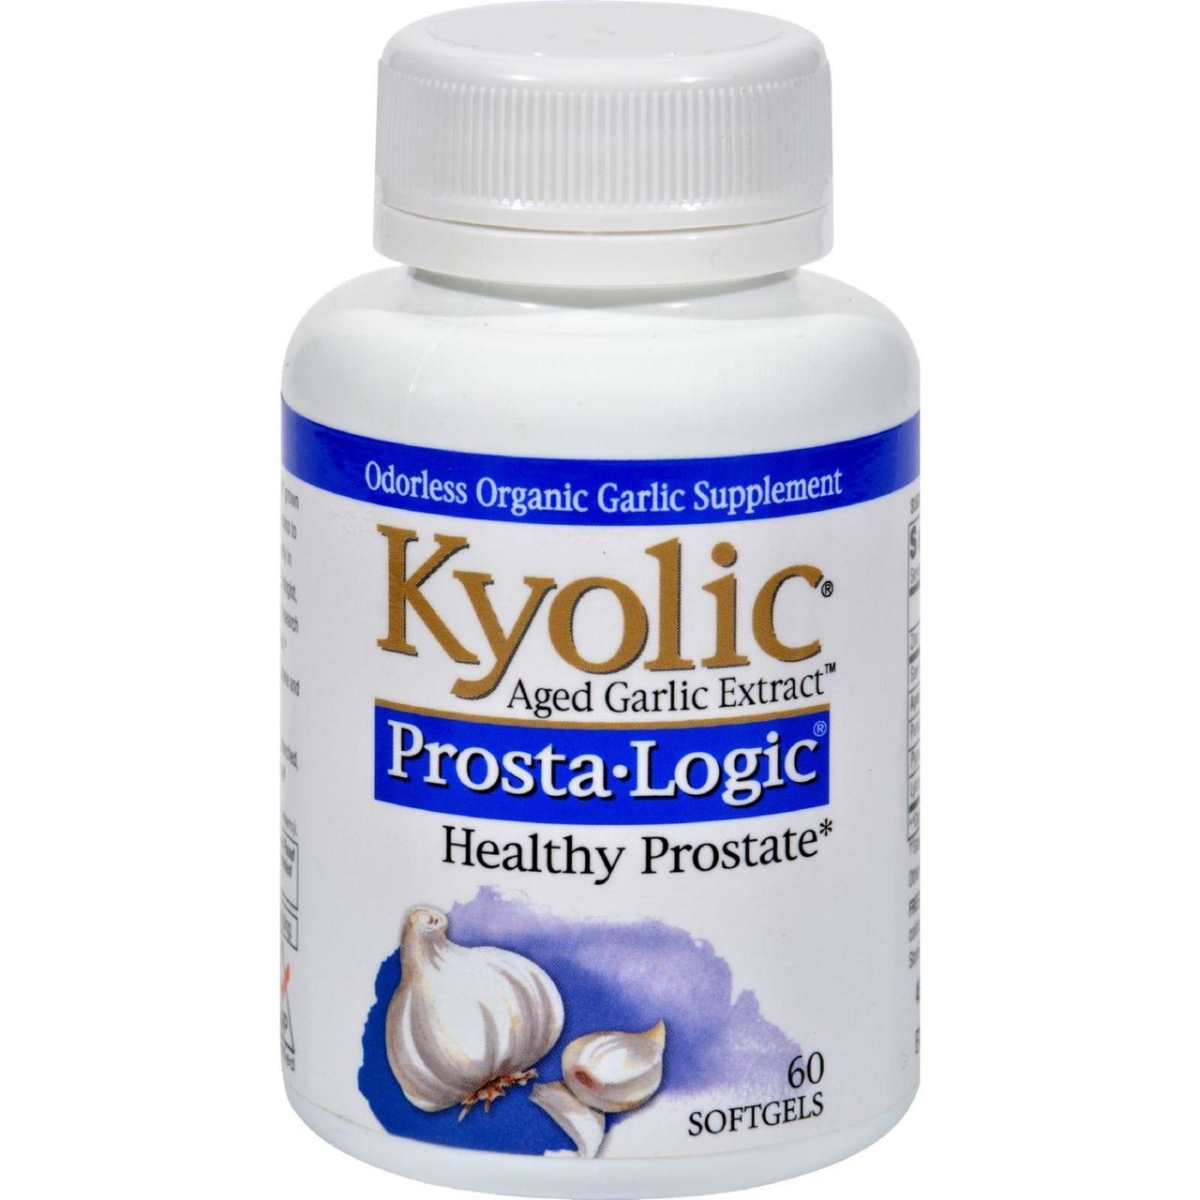 Hg0635128 Aged Garlic Extract Prosta-logic Healthy Prostate - 60 Capsules